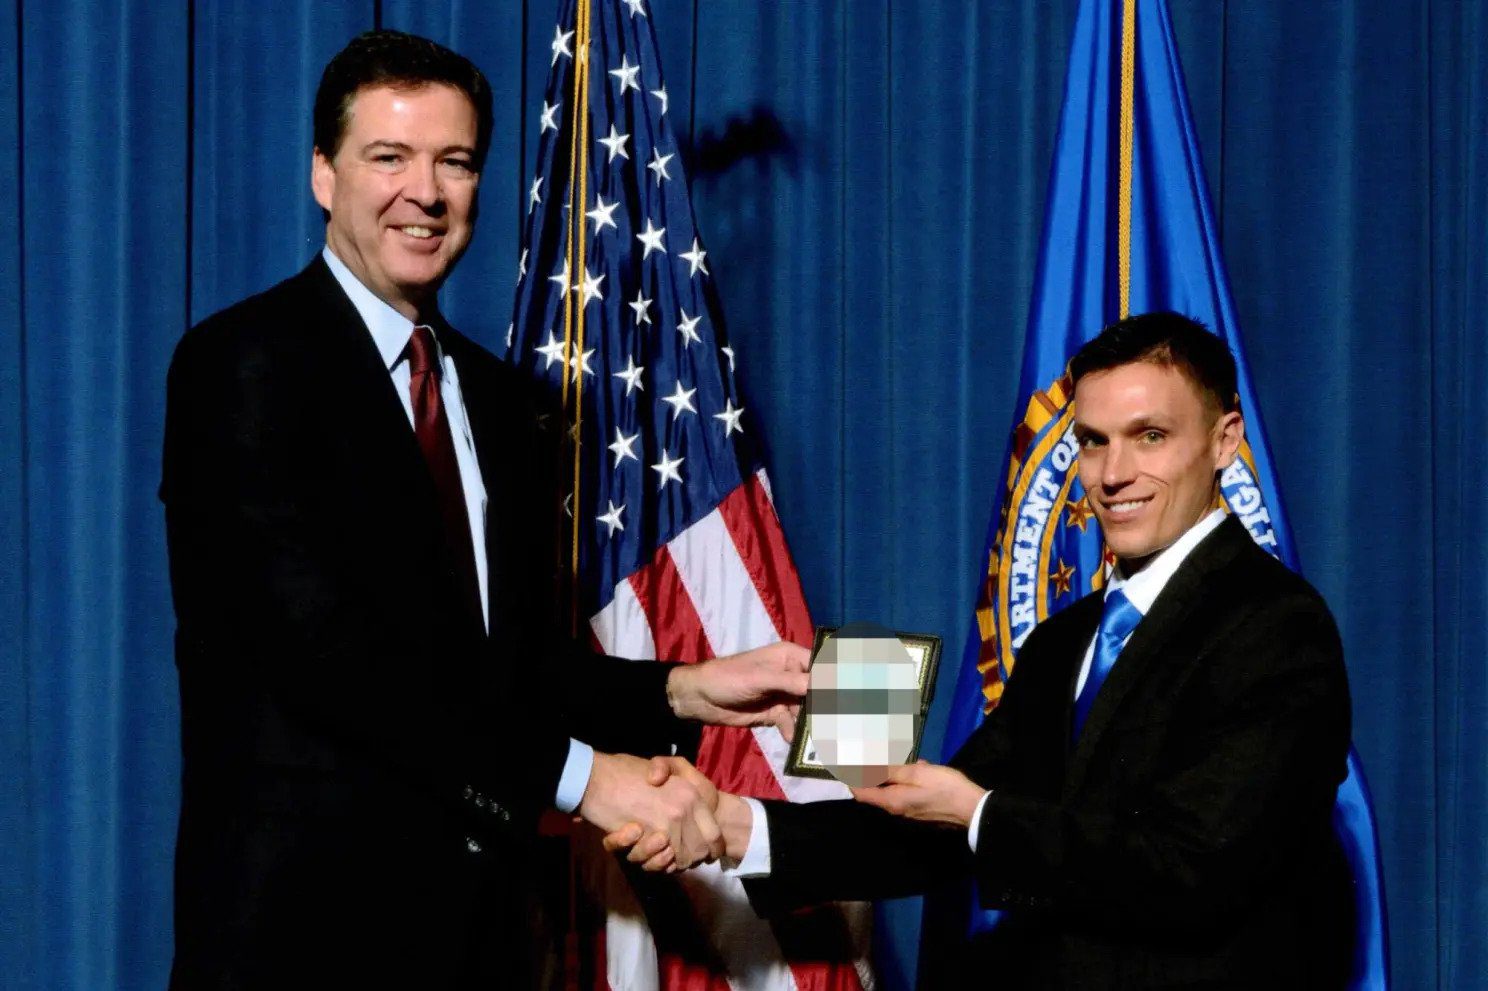 FBI Whistleblower Punished; Senator Claims Agency 'Politicized' by 'the Left'